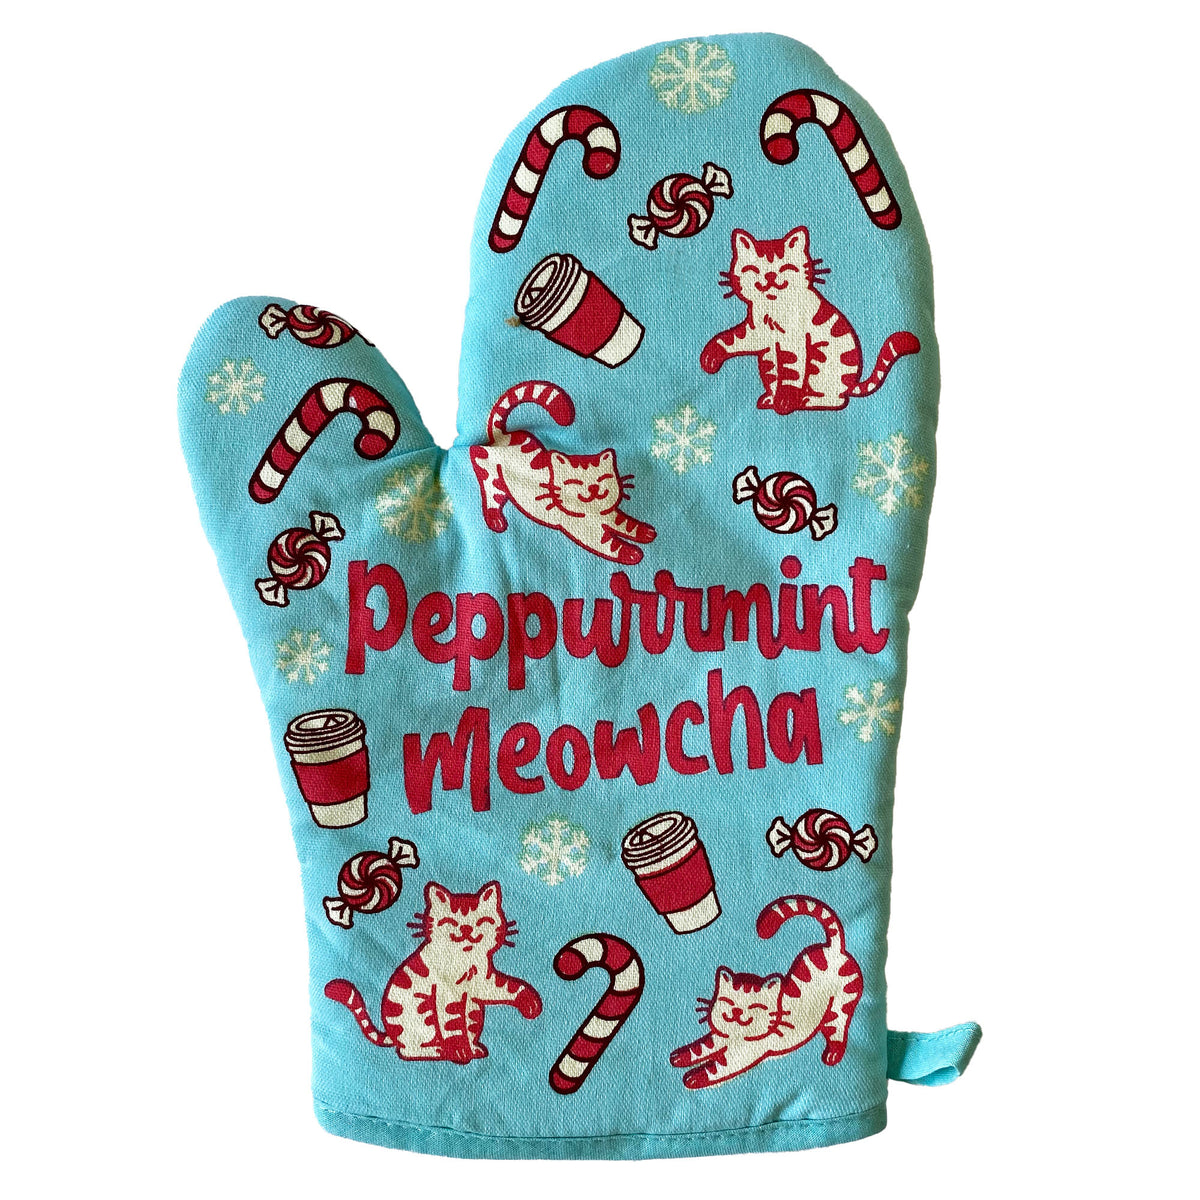 Funny Meowcha Peppurrmint Moewcha Nerdy Christmas Cat Tee